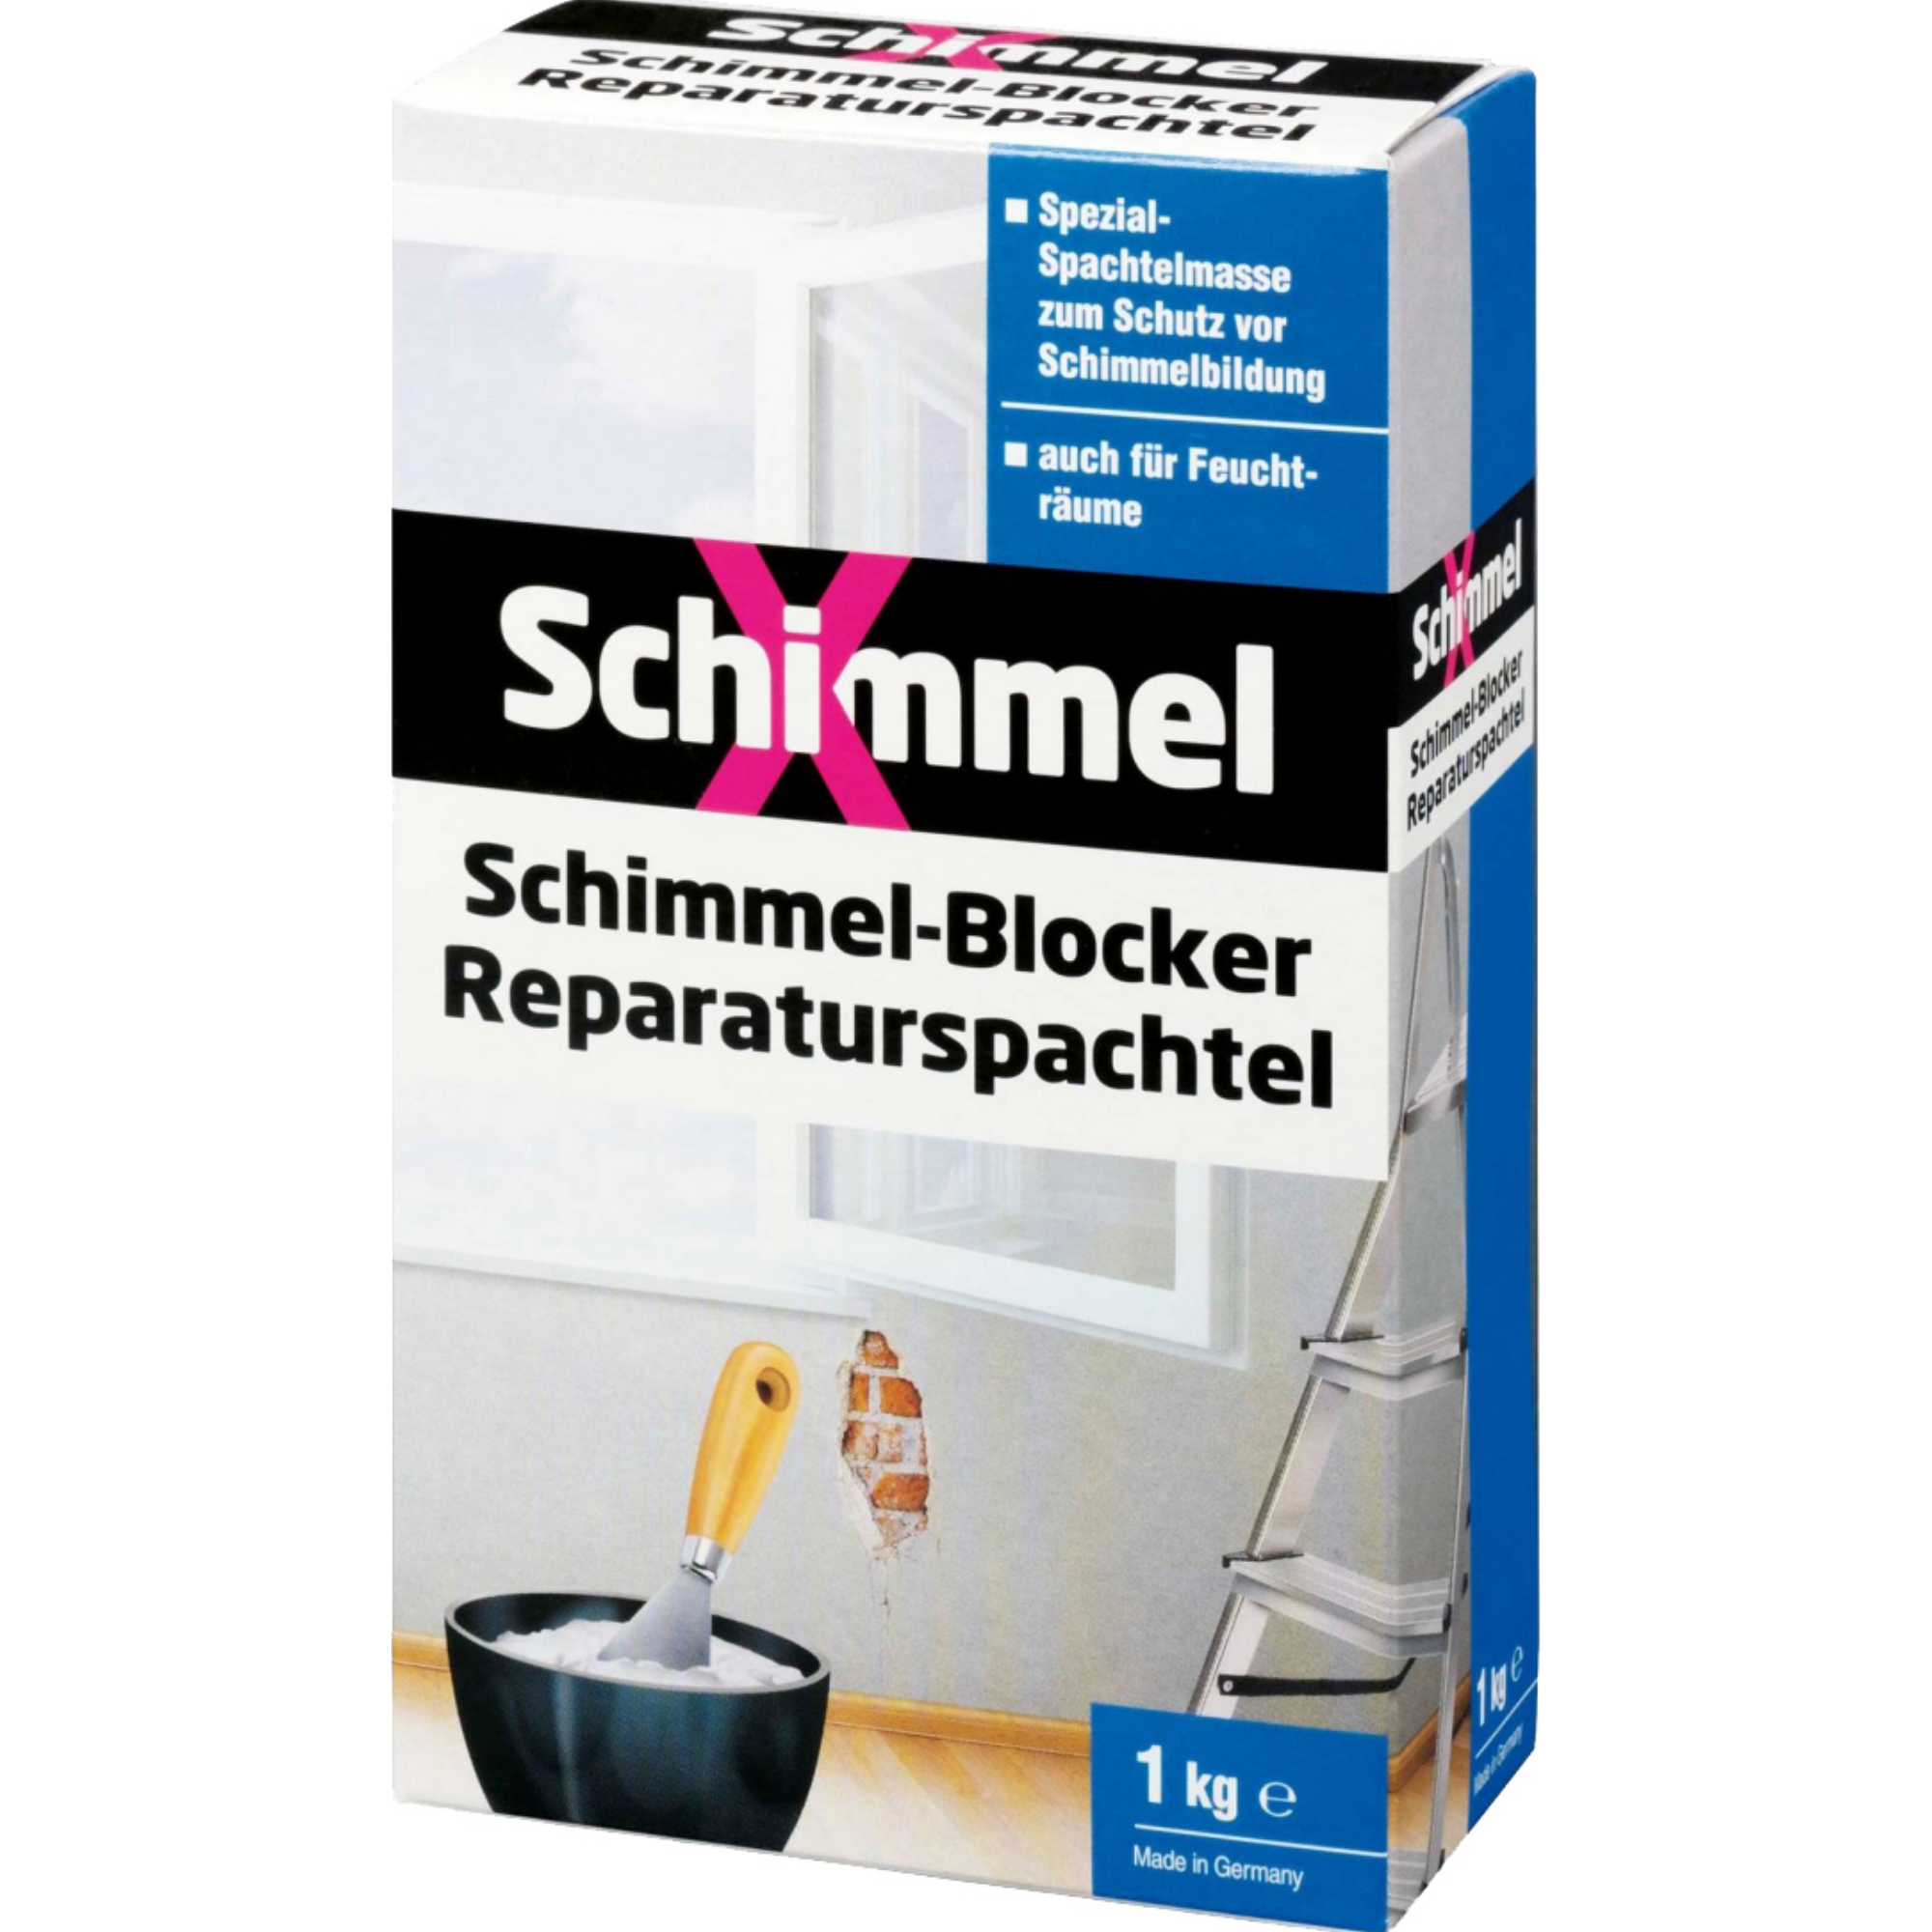 Schimmel-Blocker-Reparaturspachtel 'SchimmelX' 1 kg + product picture